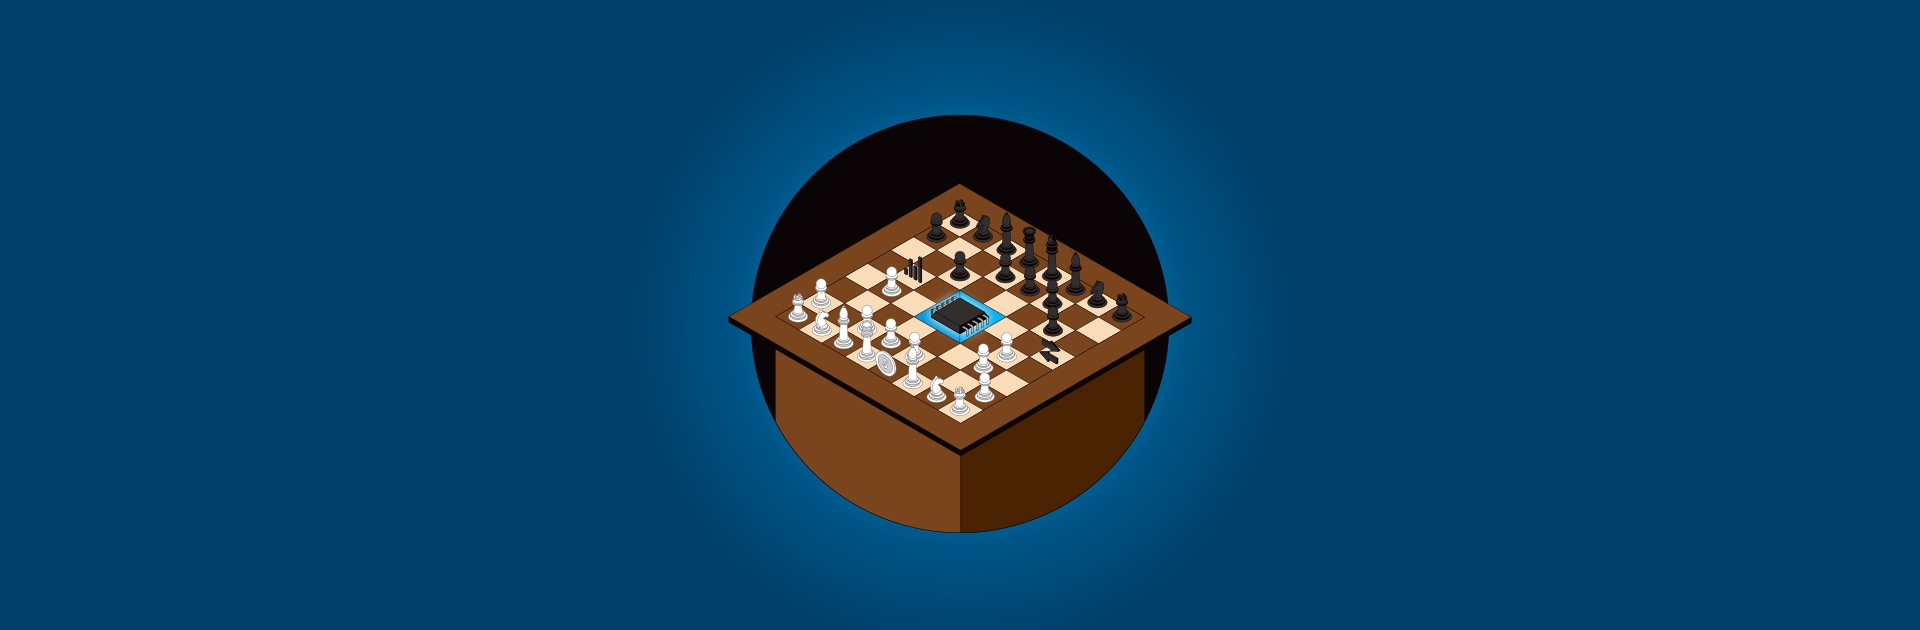 Best Puzzles for Coronavirus Lockdown: Chessboard Challenge - Bloomberg